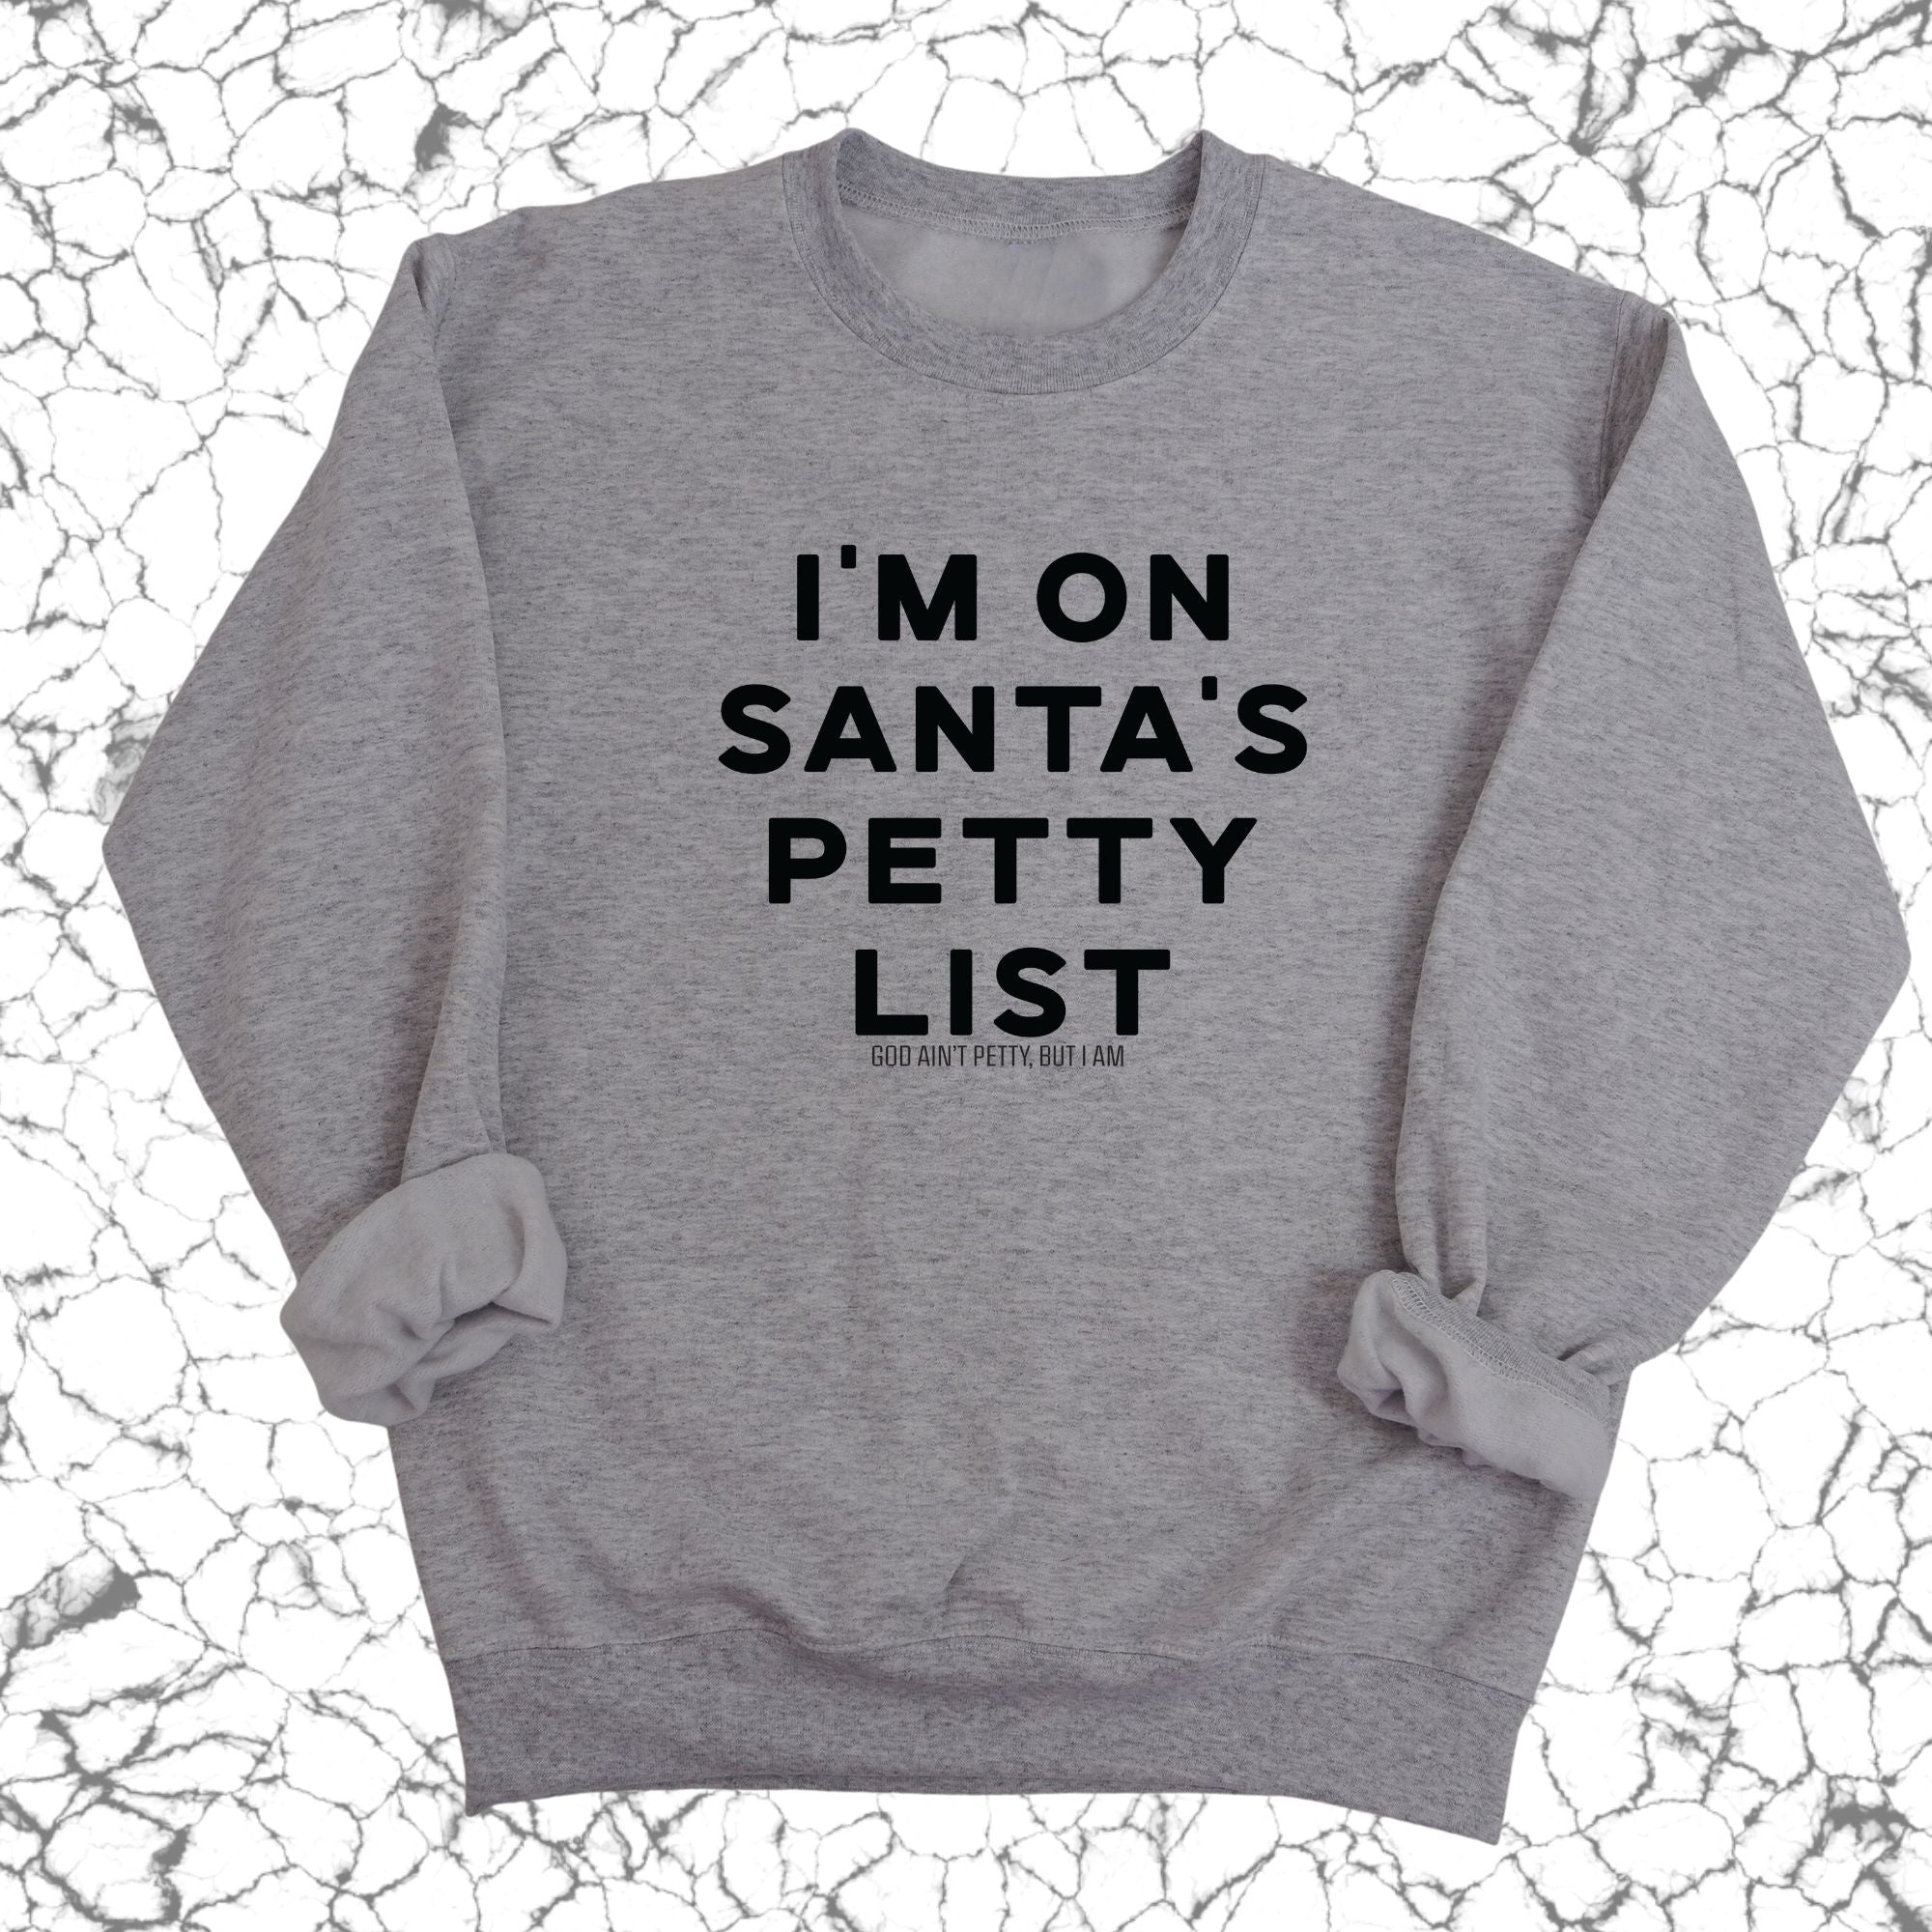 I'm on Santa's Petty List Unisex Sweatshirt-Sweatshirt-The Original God Ain't Petty But I Am